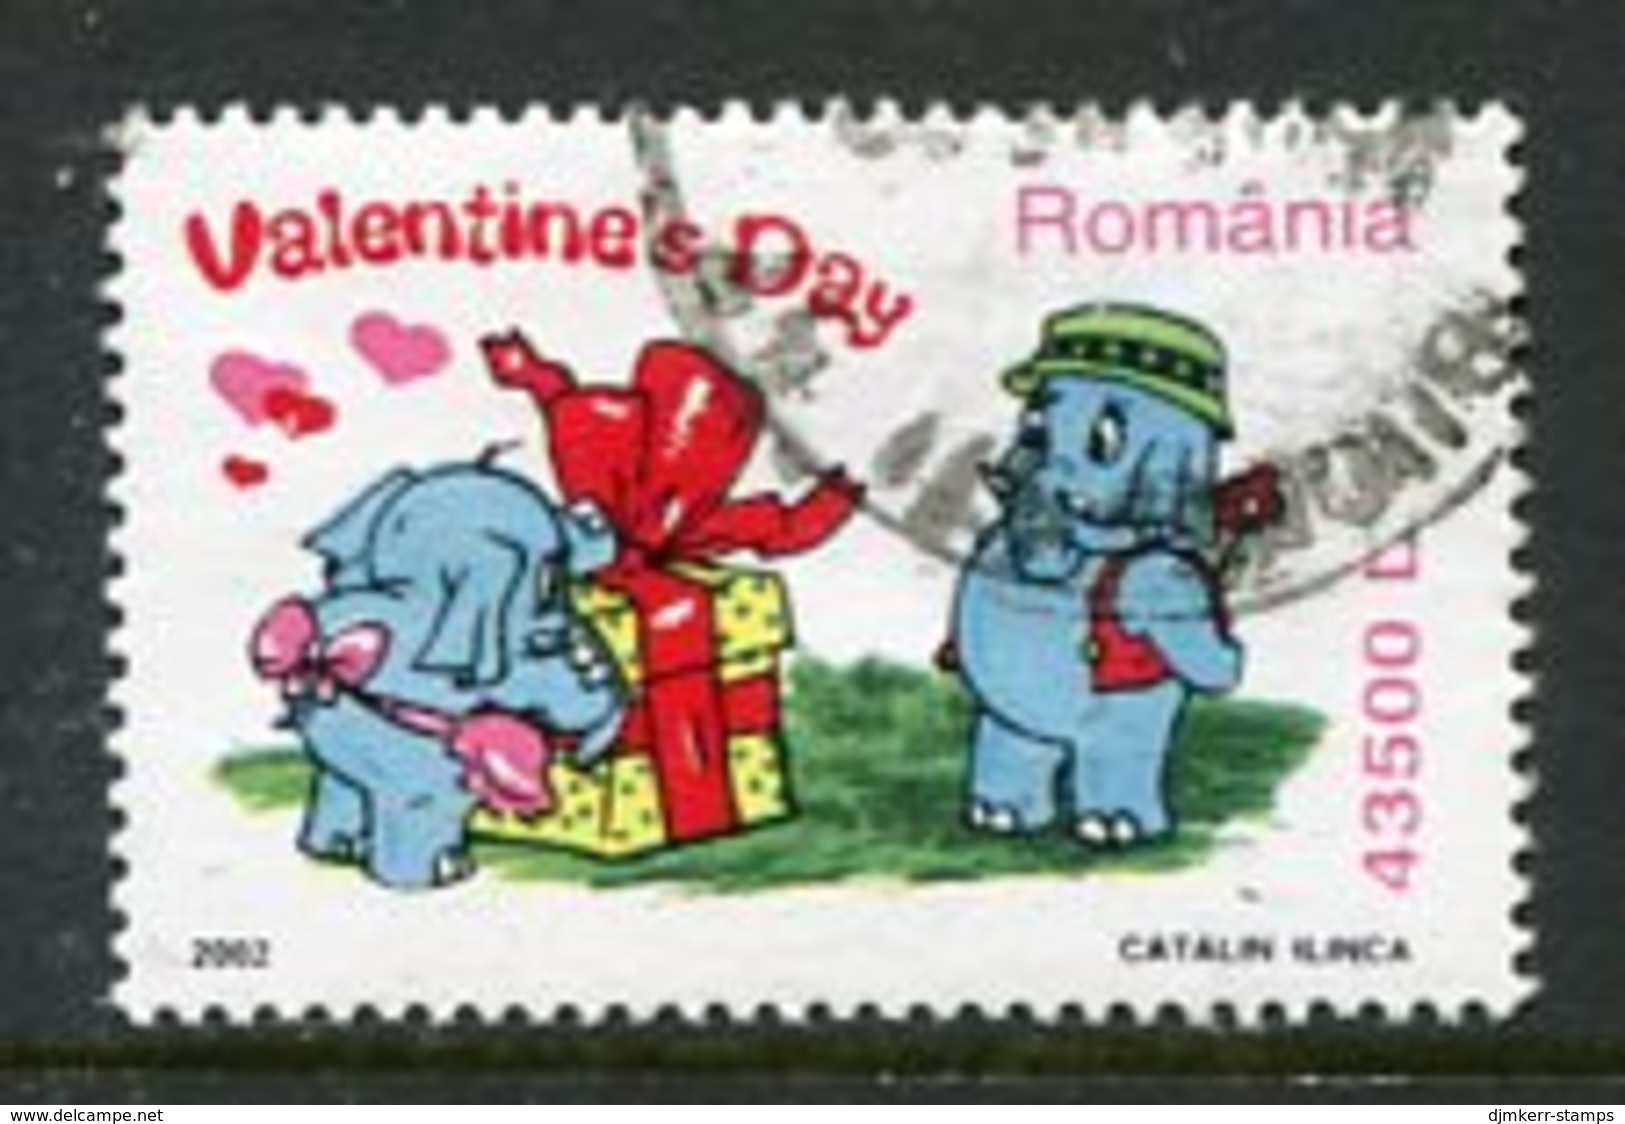 ROMANIA 2002 Valentines Day 43500 L. Used.  Michel 5640 - Gebruikt